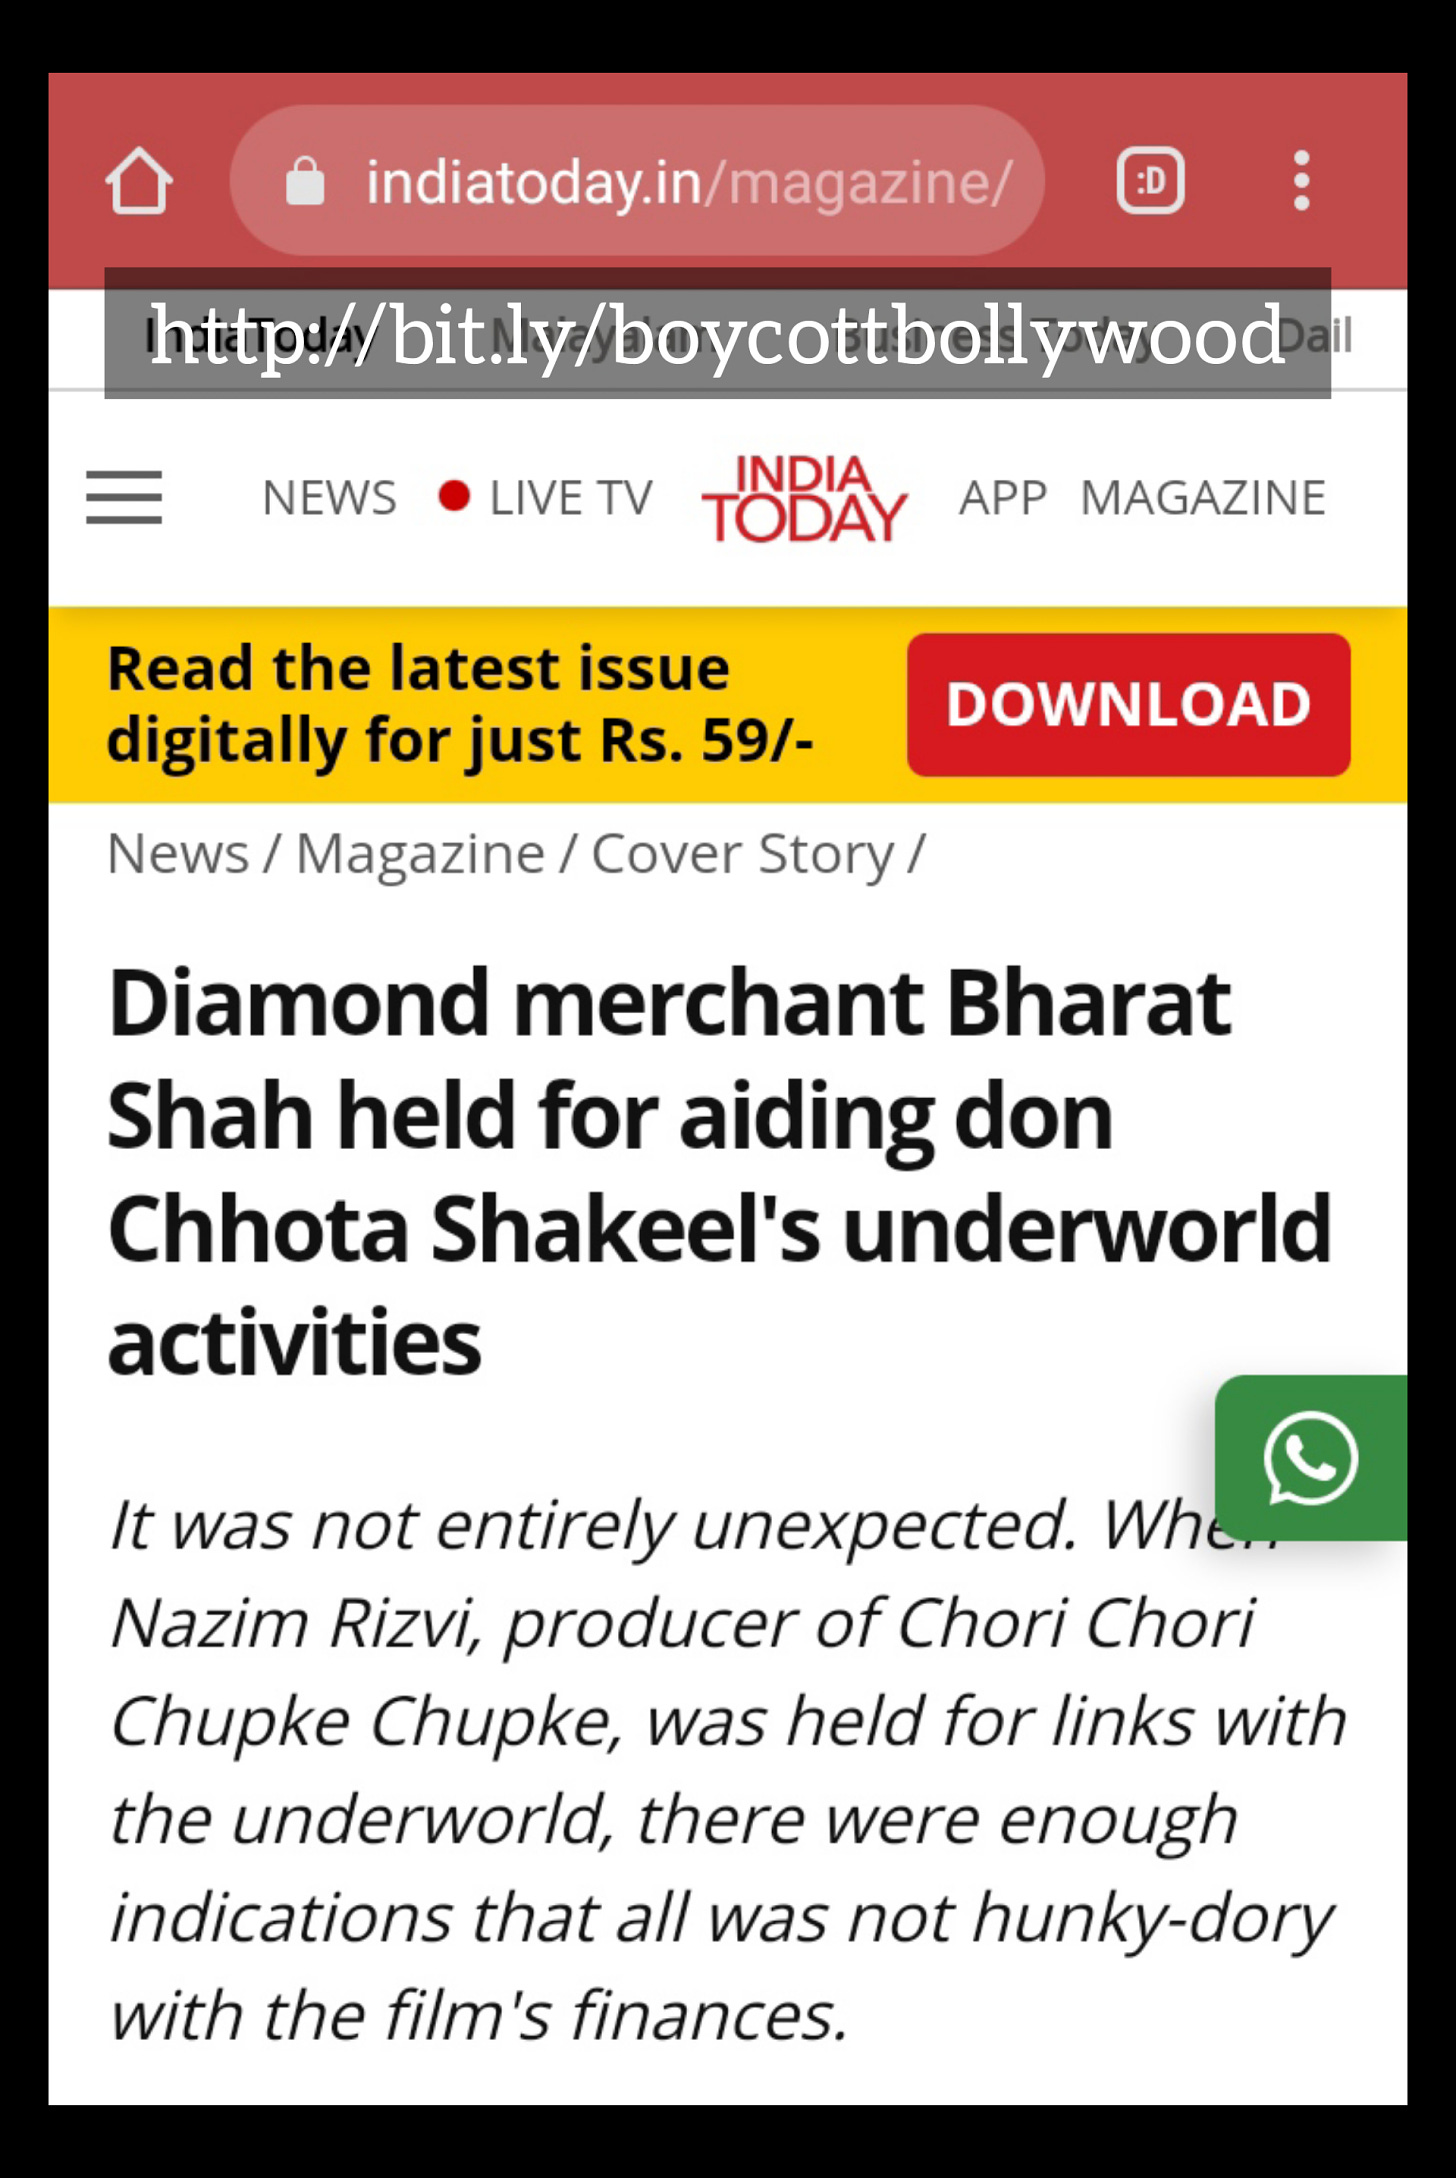 The Underworld connection with the Bollywood movie Chori Chori Chupke Chupke